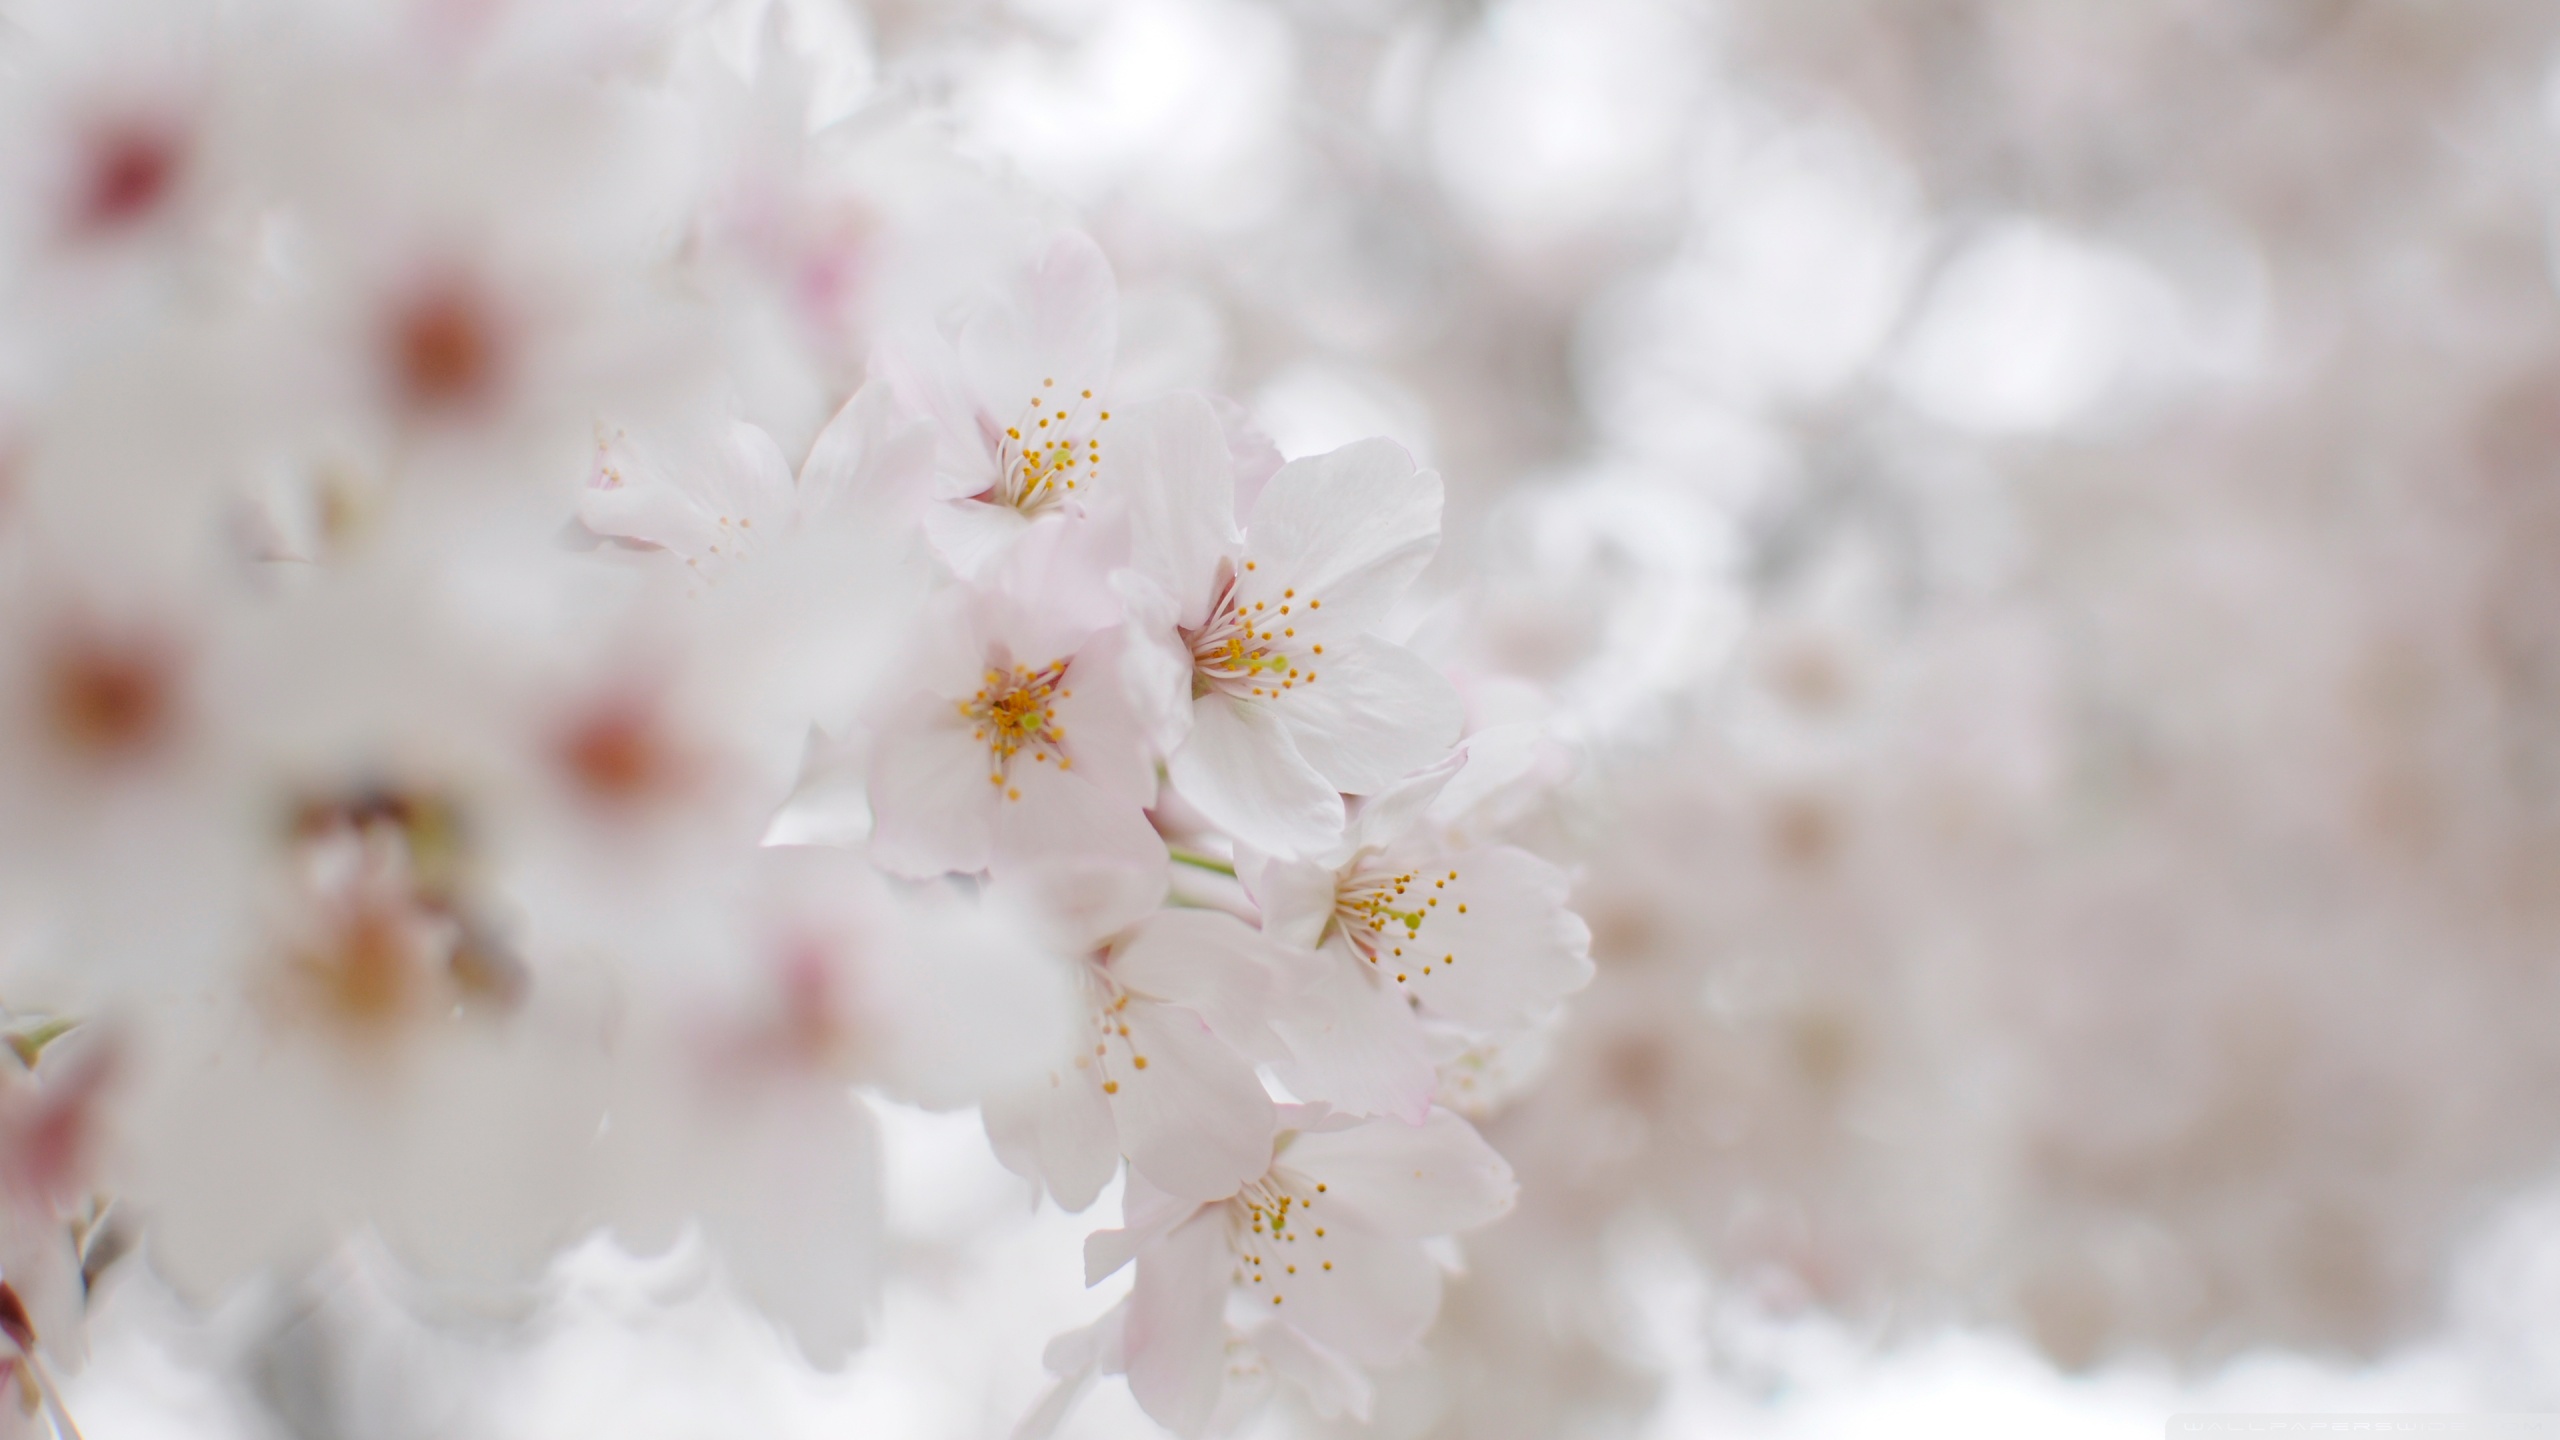 White Cherry Blossom Macro Ultra HD Desktop Background Wallpaper for 4K UHD TV, Multi Display, Dual Monitor, Tablet